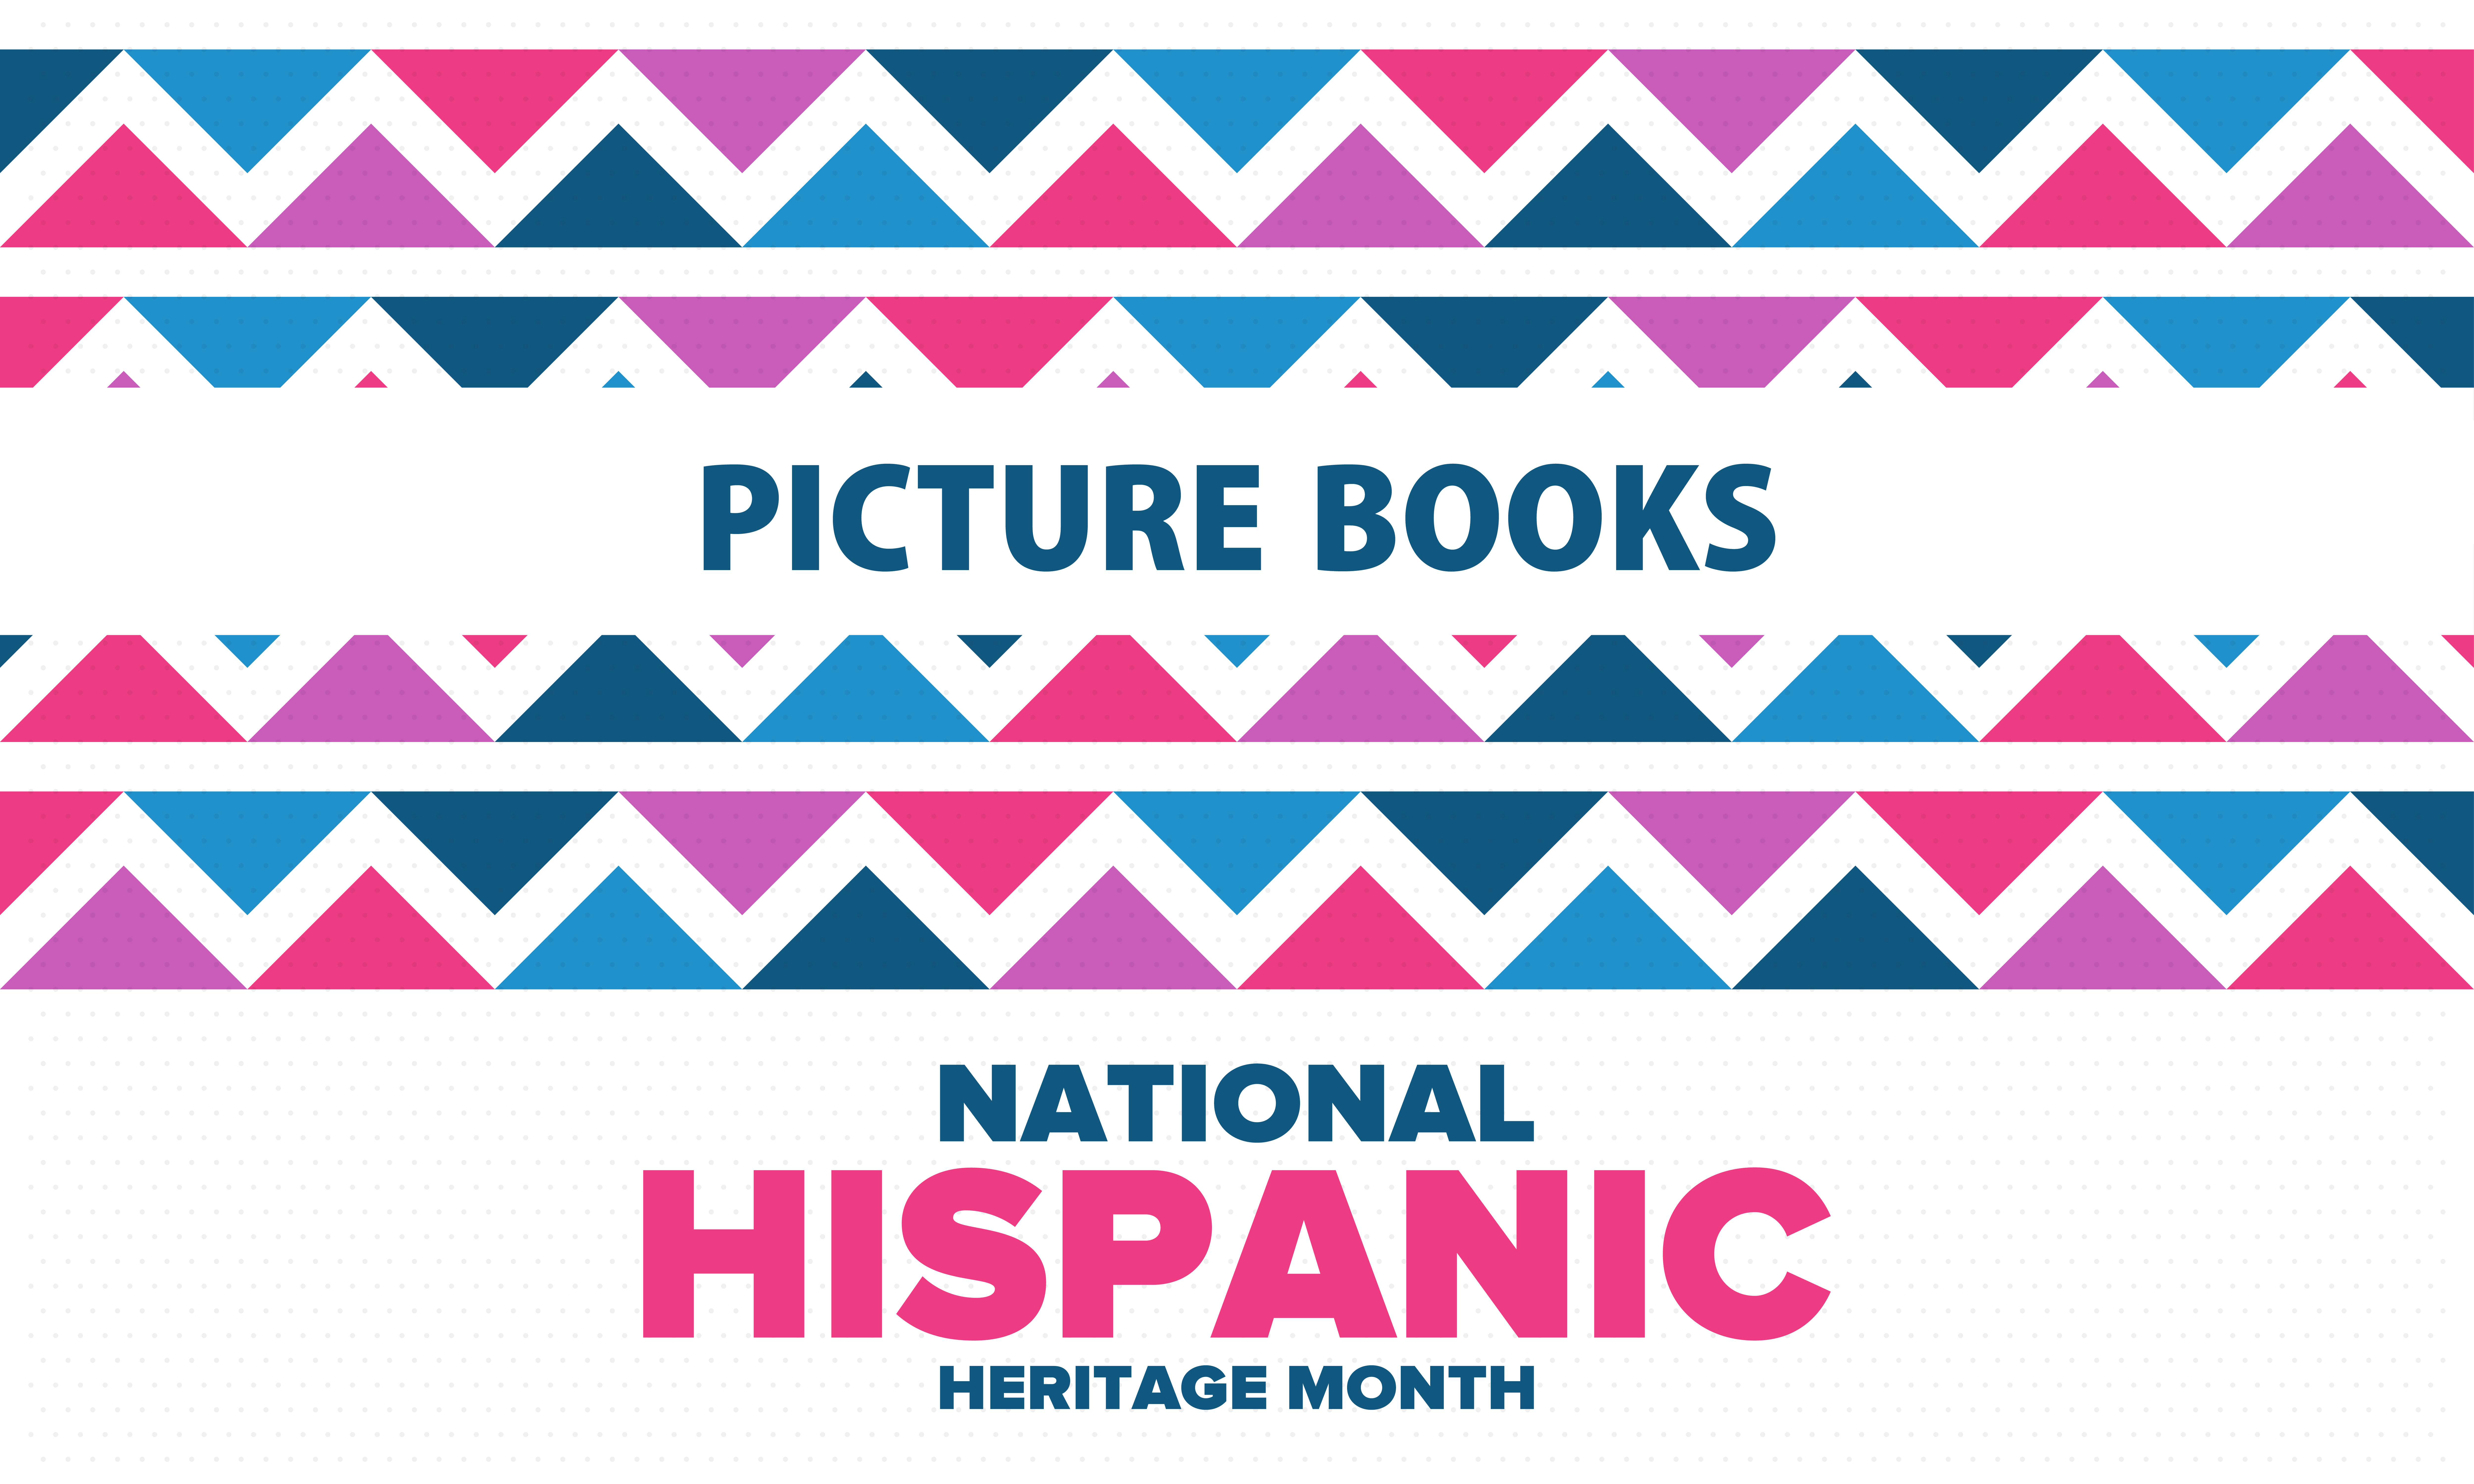 Hispanic Heritage Month: Picture Books